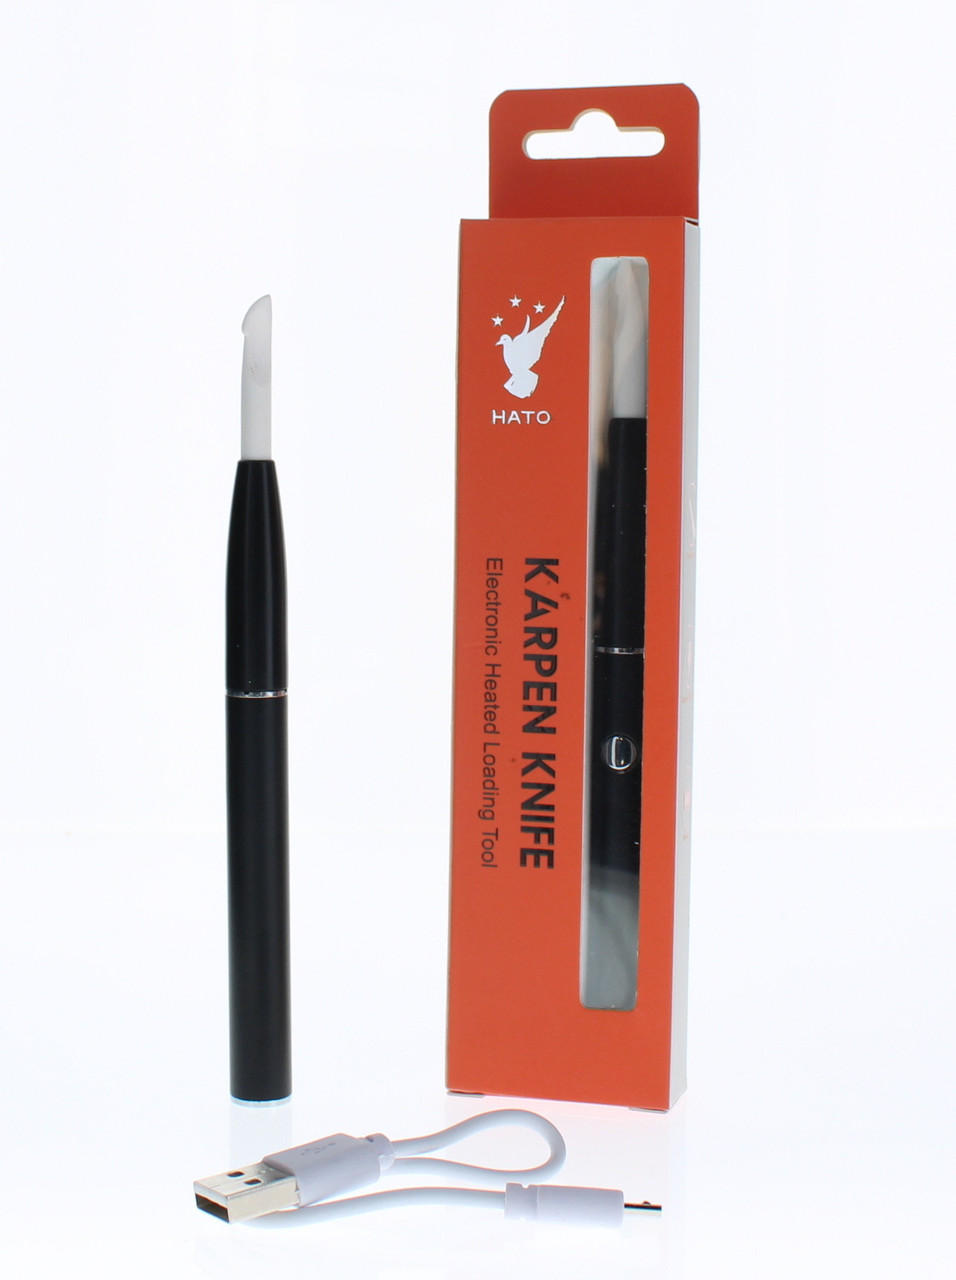 VapeBrat Hot Knife: Adjustable Temperature Electric Dab Tool